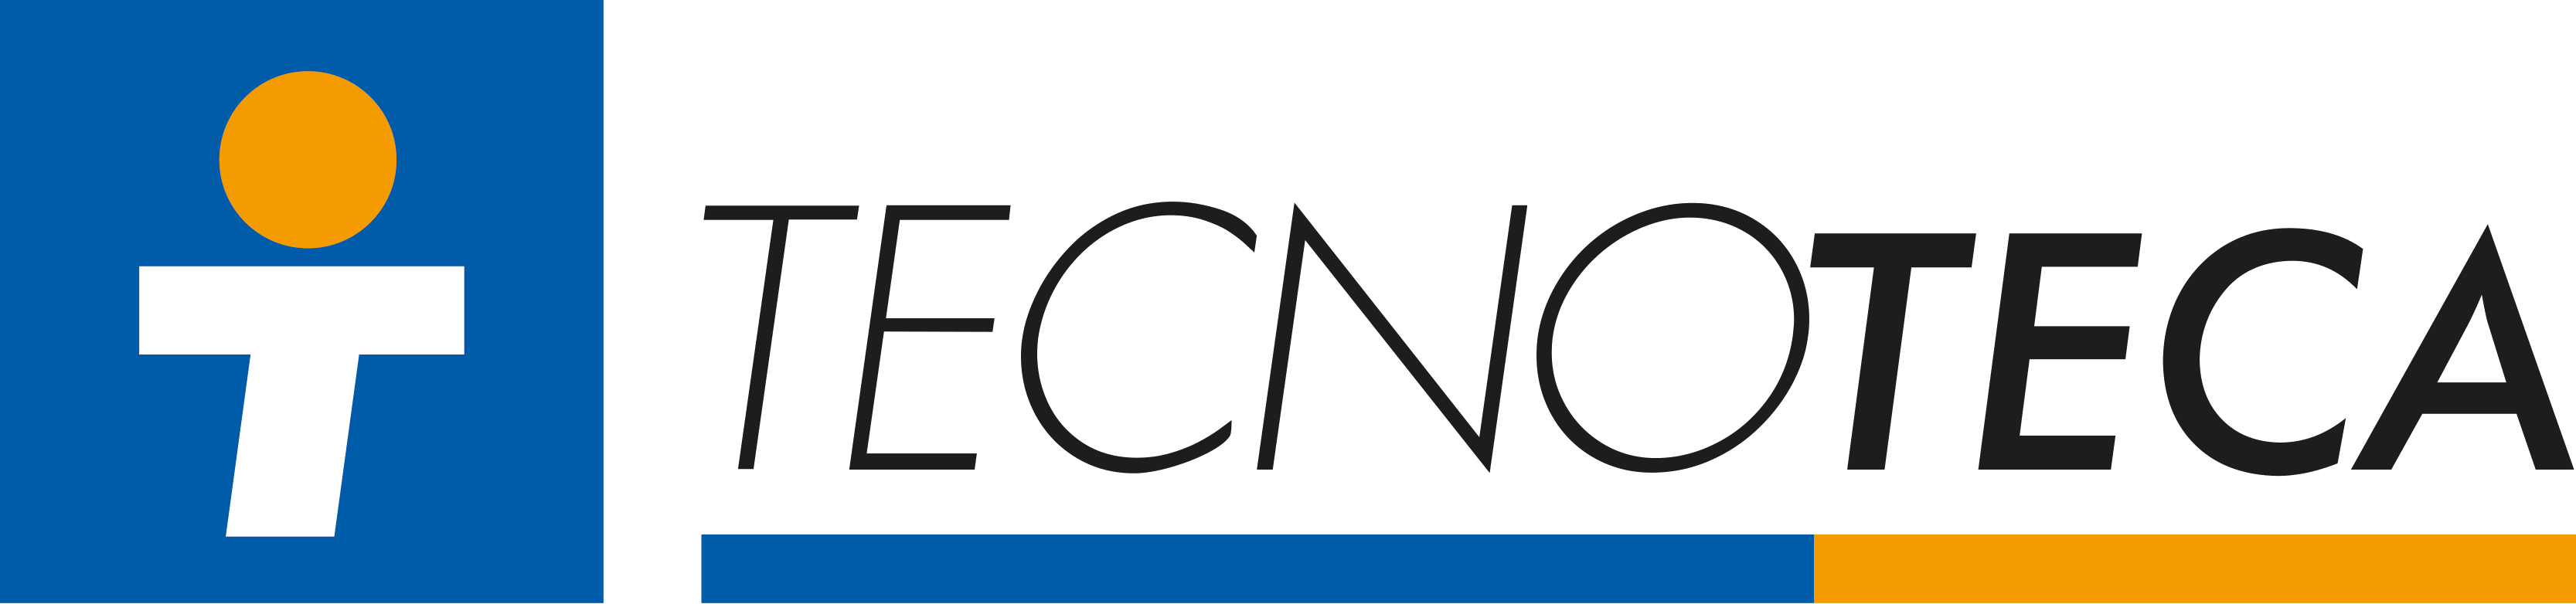 Logo_Tecnoteca_new.png